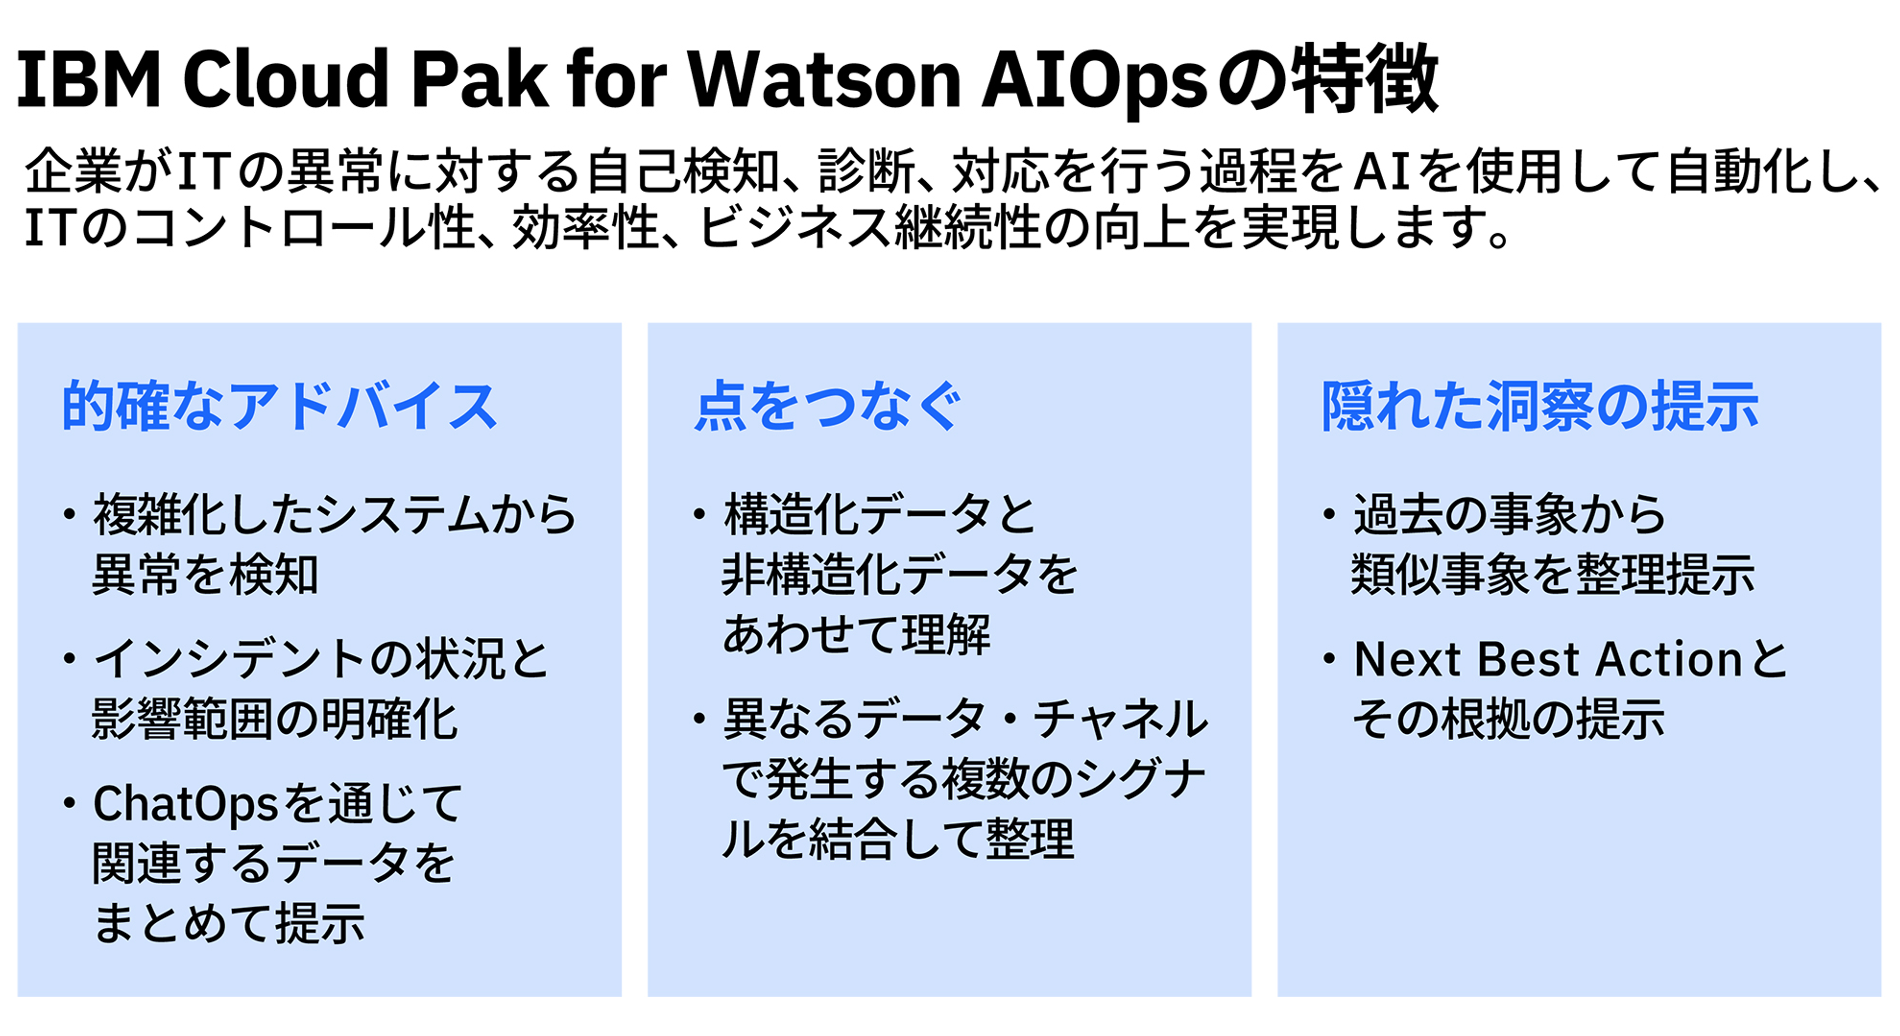 IBM Cloud Pak for Watson AIOpsの特徴